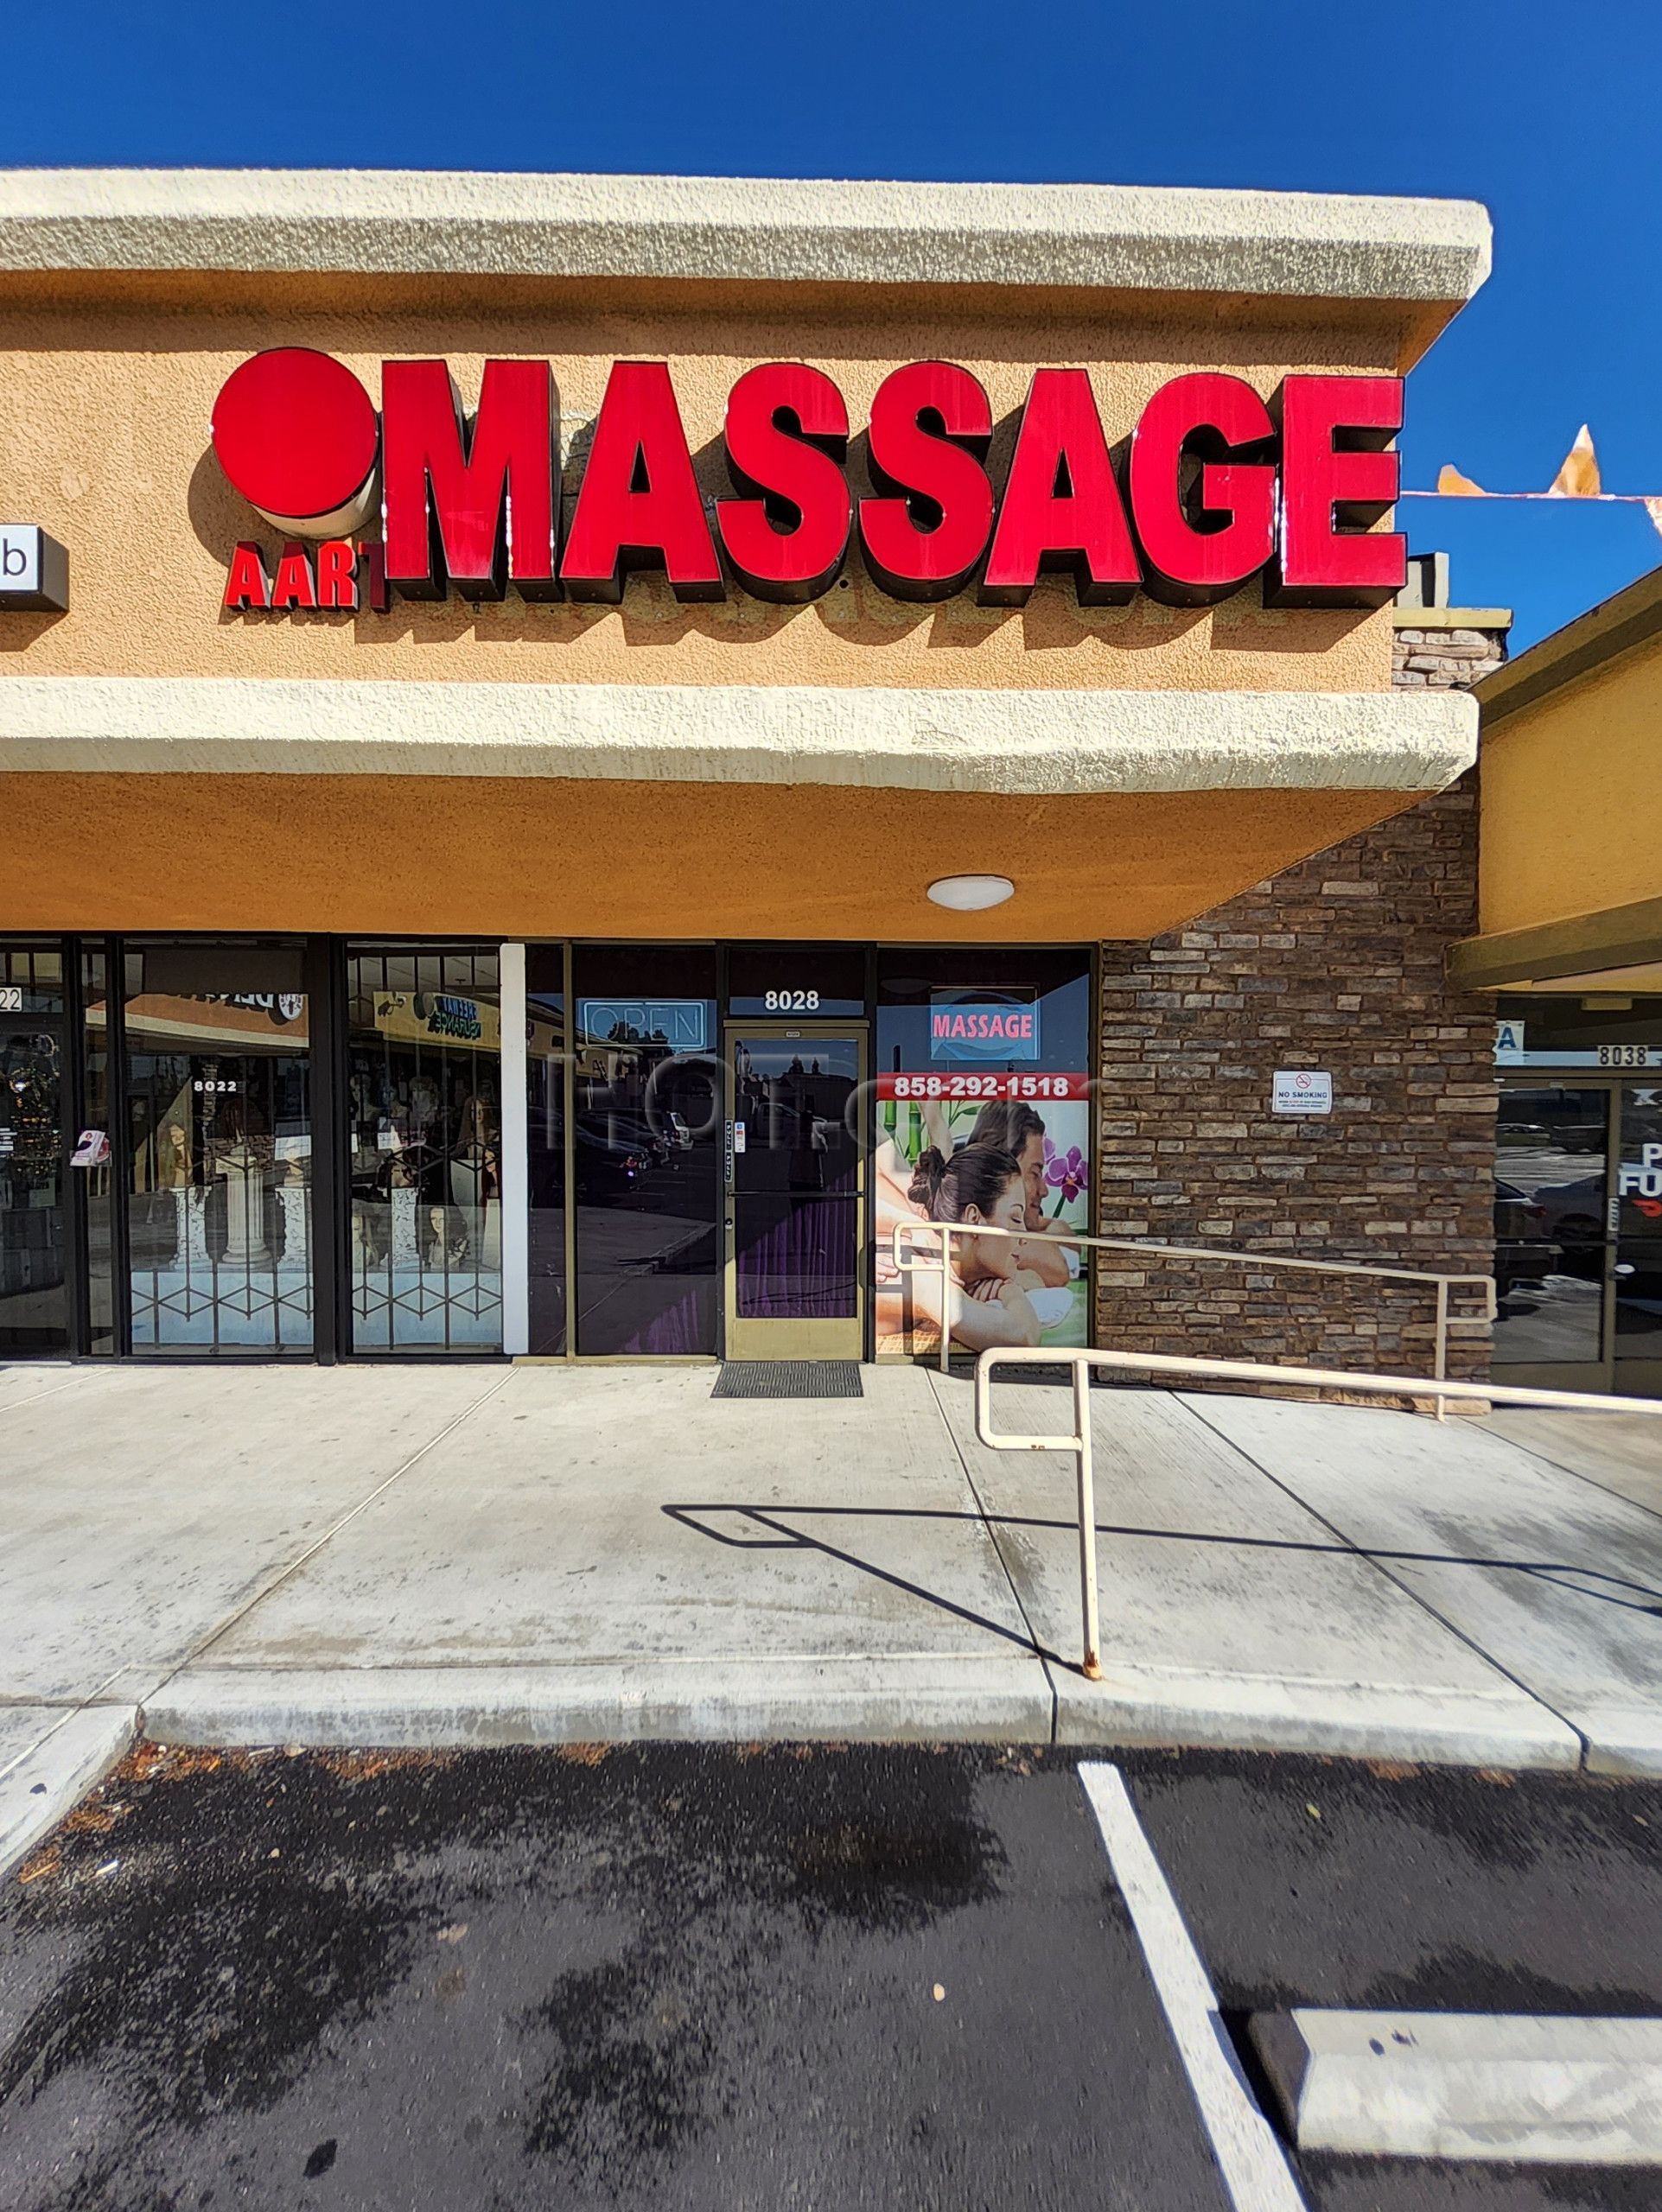 San Diego, California Aart Massage & Spa